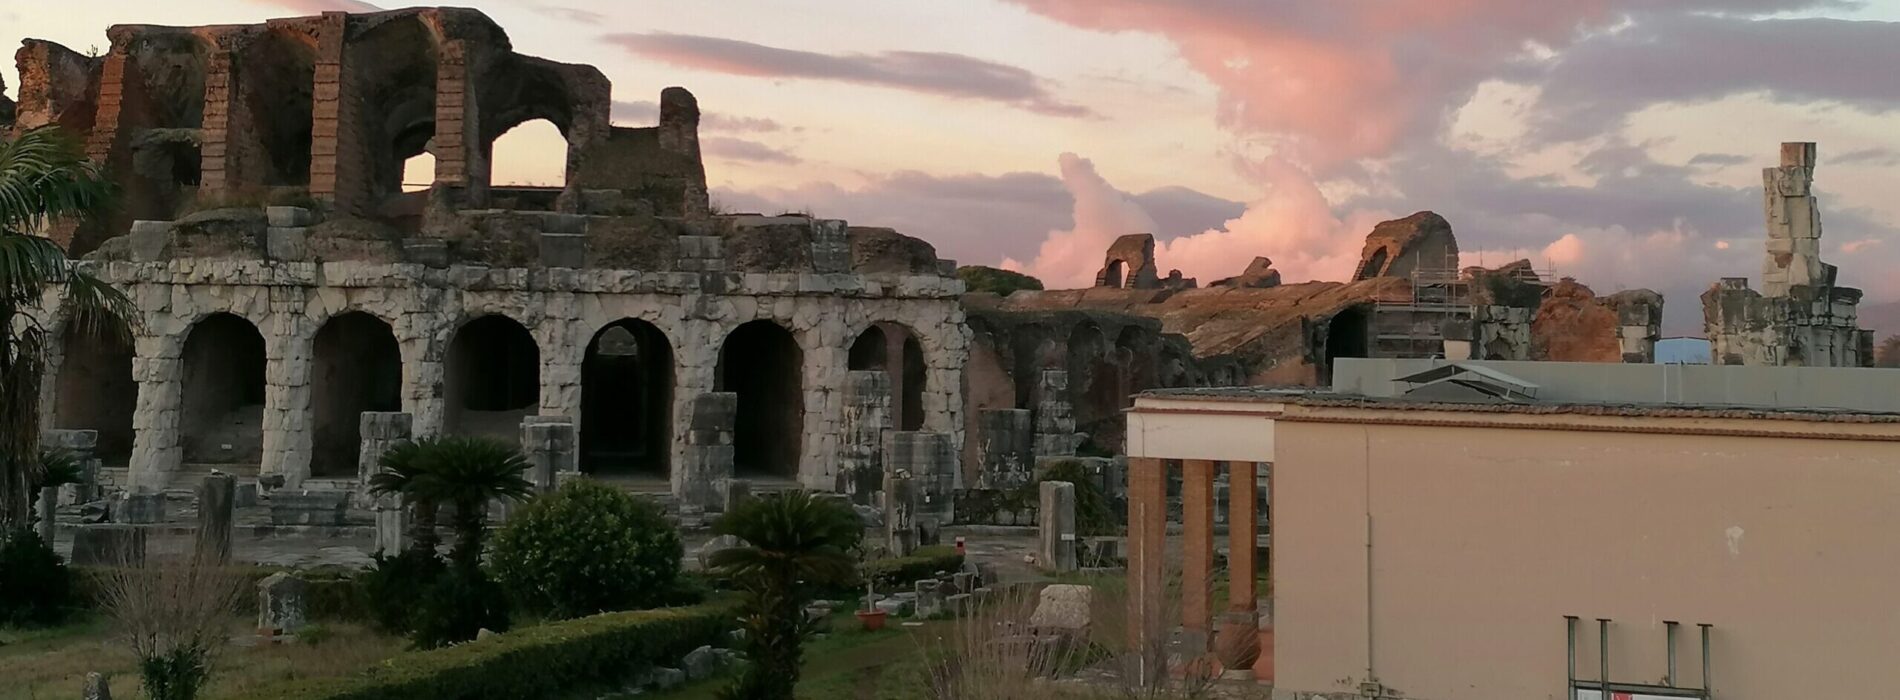 Appia Day-Capua al Quadrato, tra storia arte e archeologia